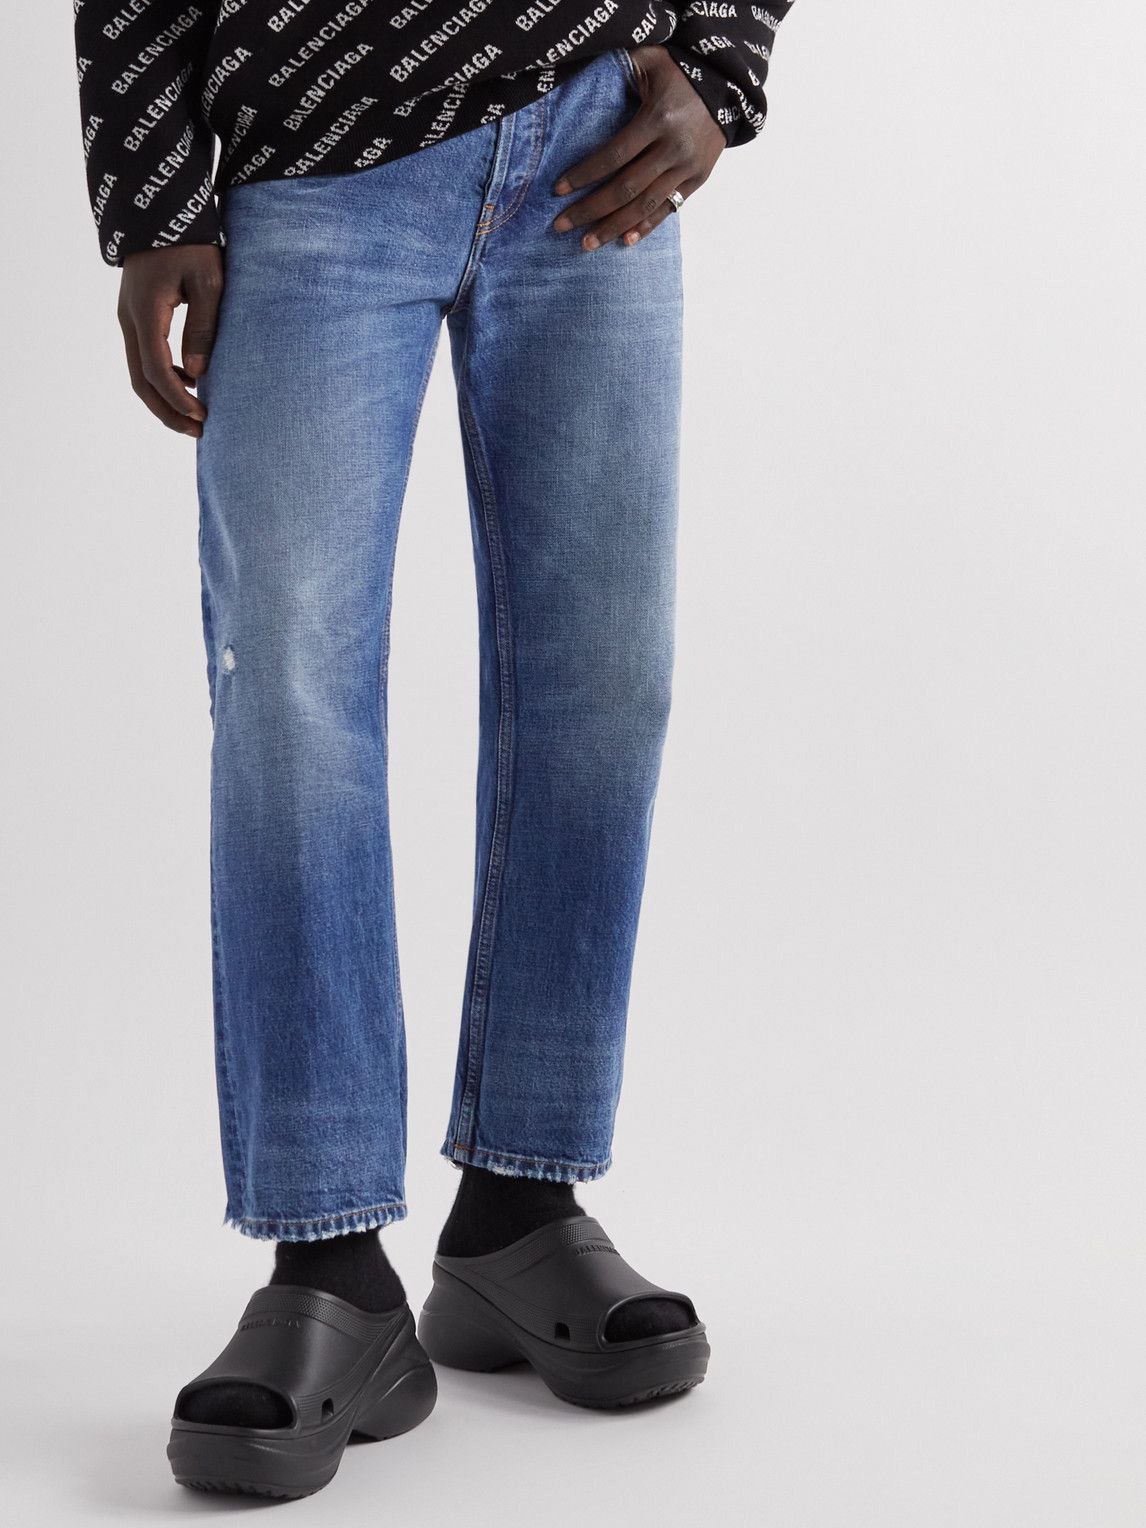 Mid-rise flared jeans in blue - Balenciaga